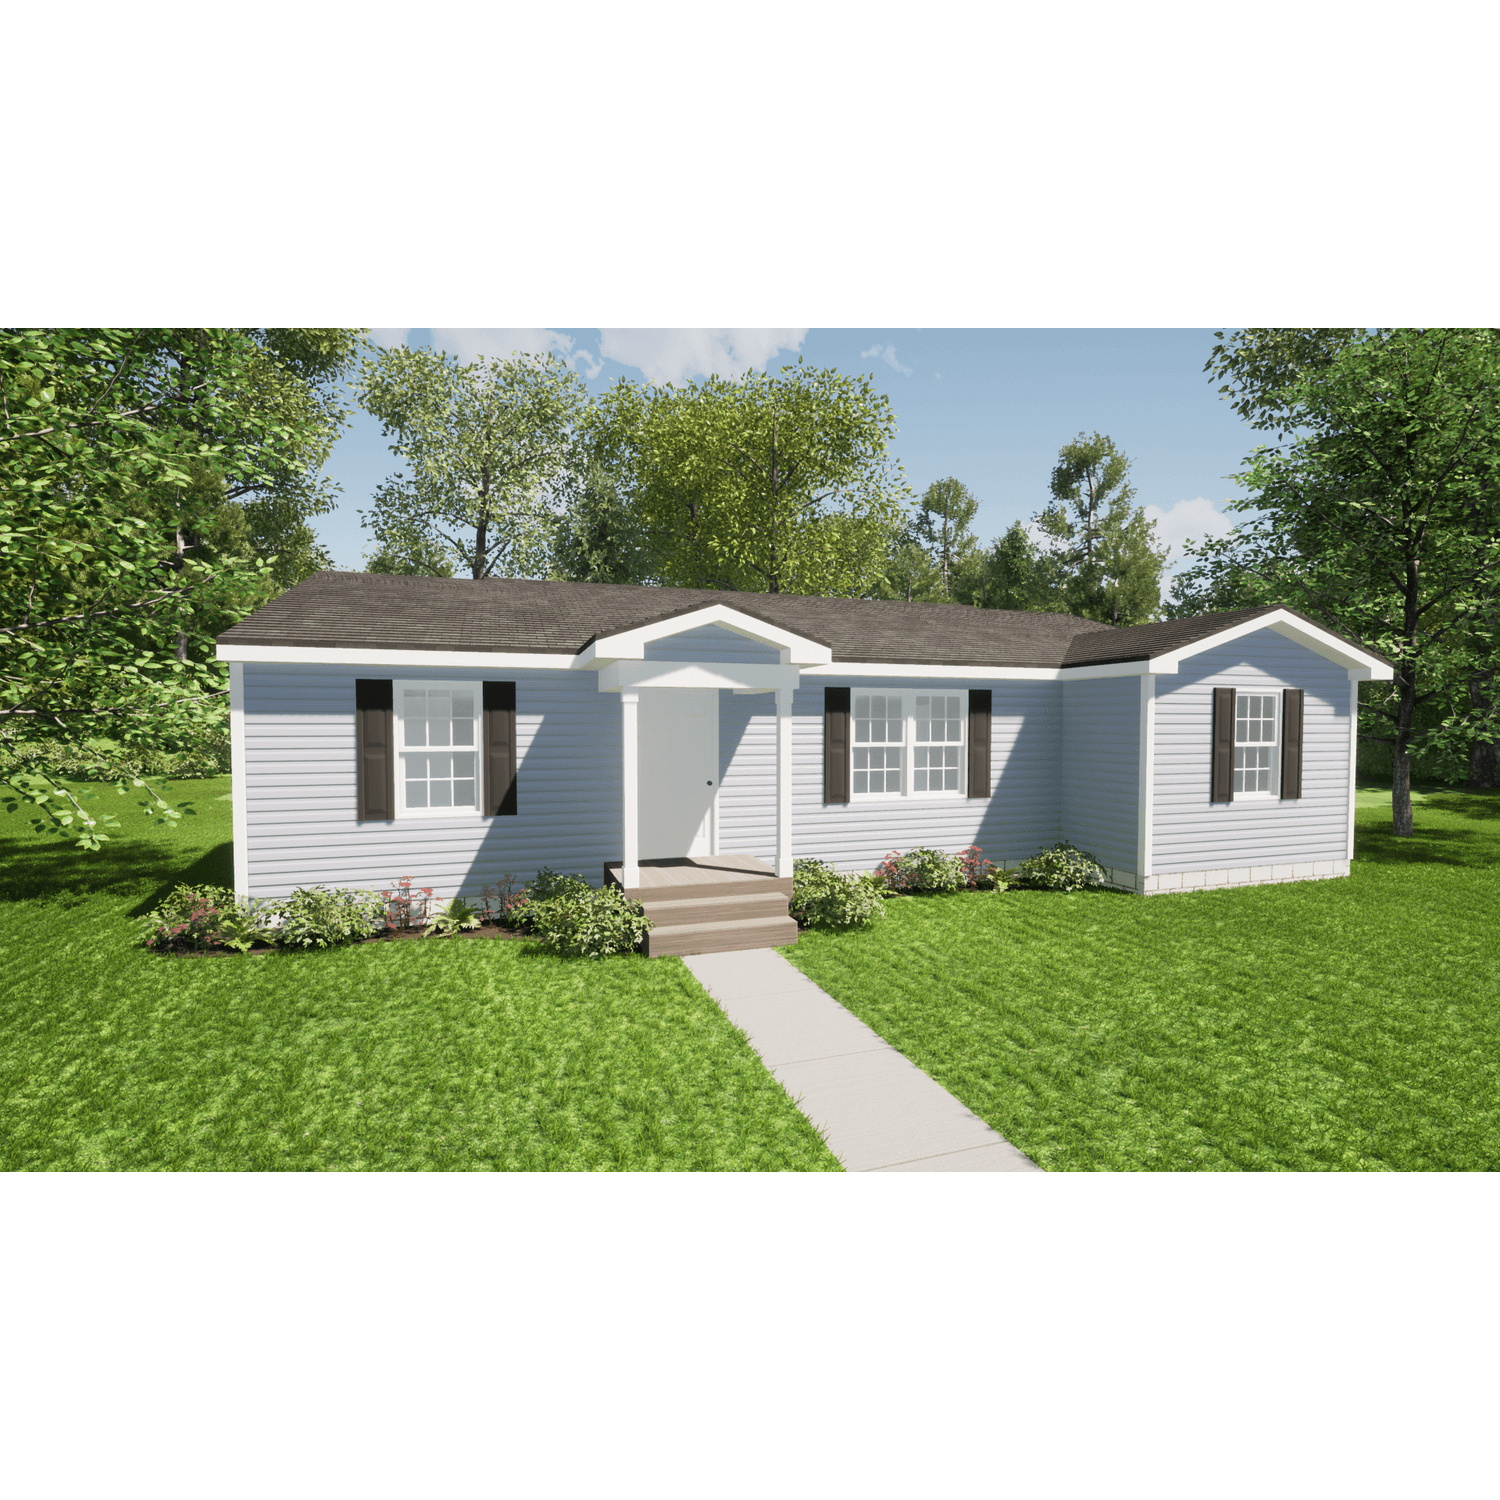 Unifamiliar por un Venta en Valuebuild Homes - Fayetteville - Build On Your Lo 3015 Jefferson Davis Highway (Us1), Fayetteville, NC 28314